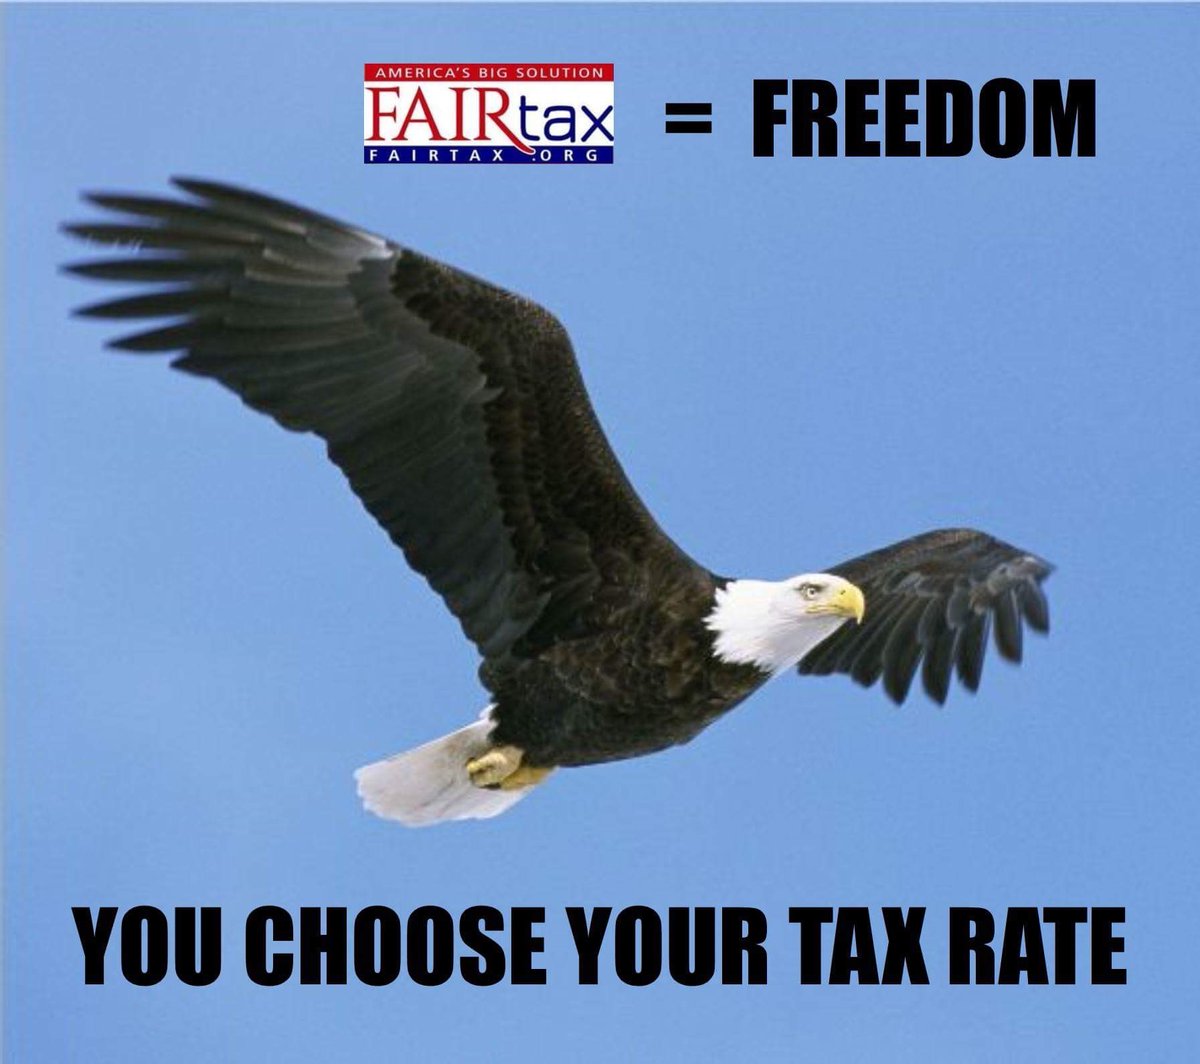 #TaxReform 
#AbolishesTheIRS 
#WealthTax
#NotRegressive
#RevenueNeutral
#Progressive
#FAIRtax is NOT just a slogan it is a #freedom tax.